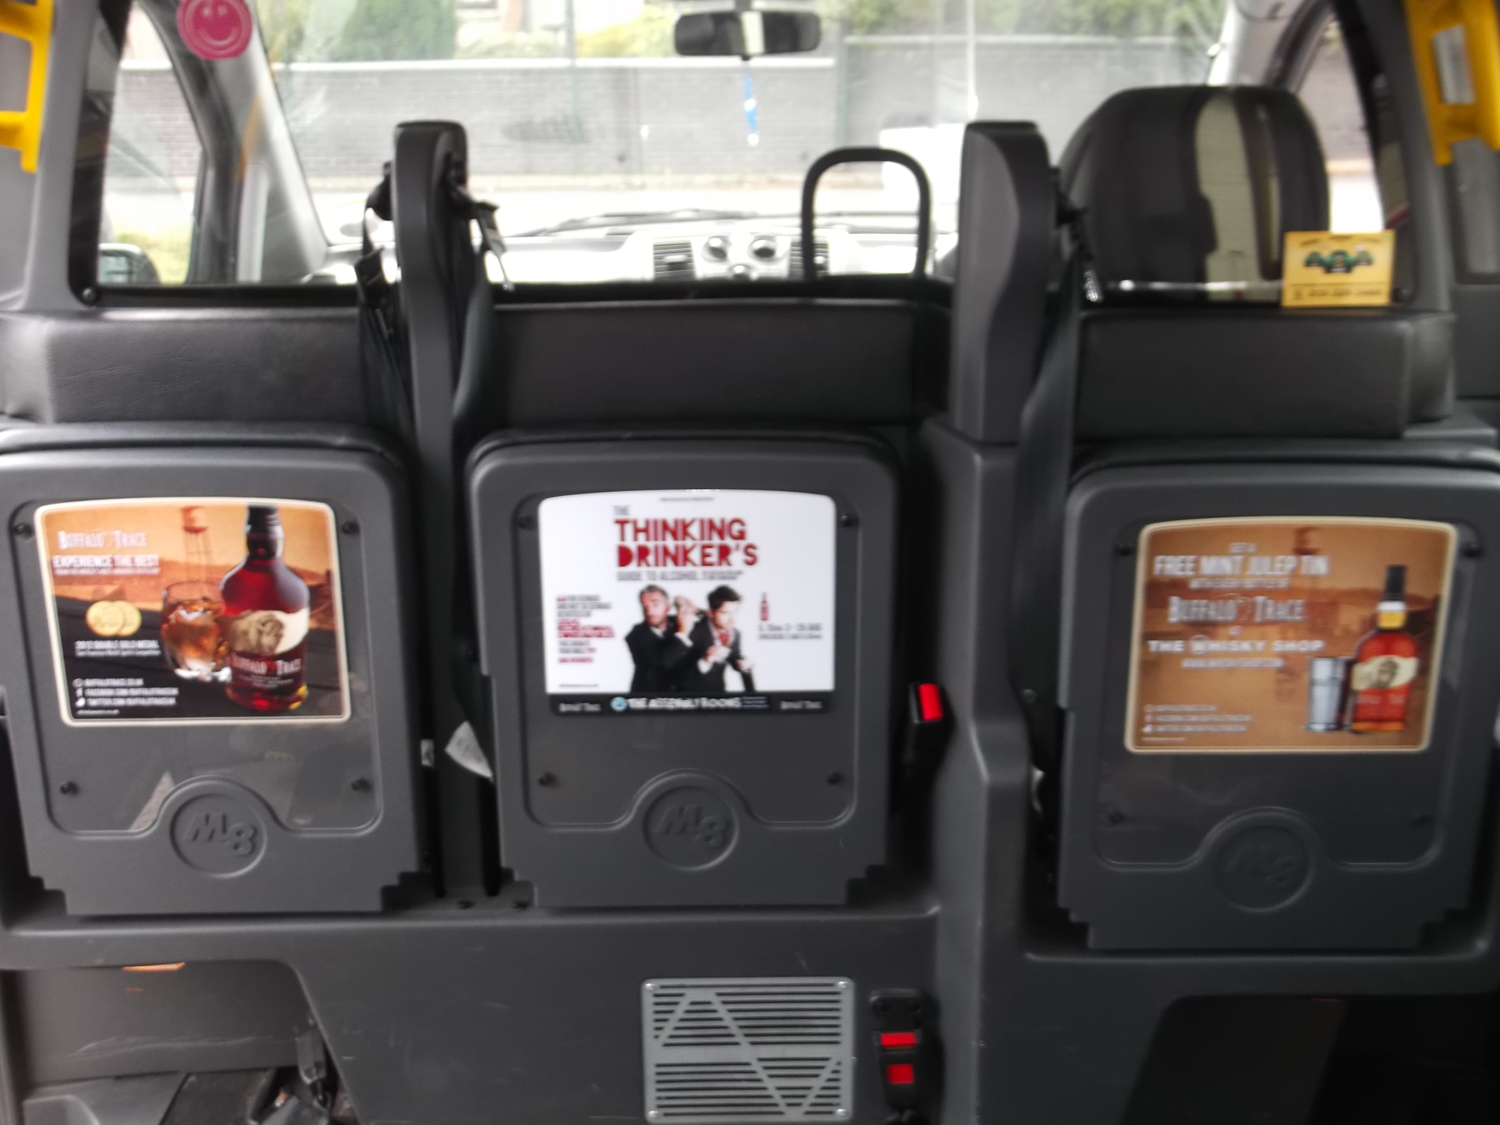 2013 Ubiquitous taxi advertising campaign for Hi Spirits - Hi Spirits